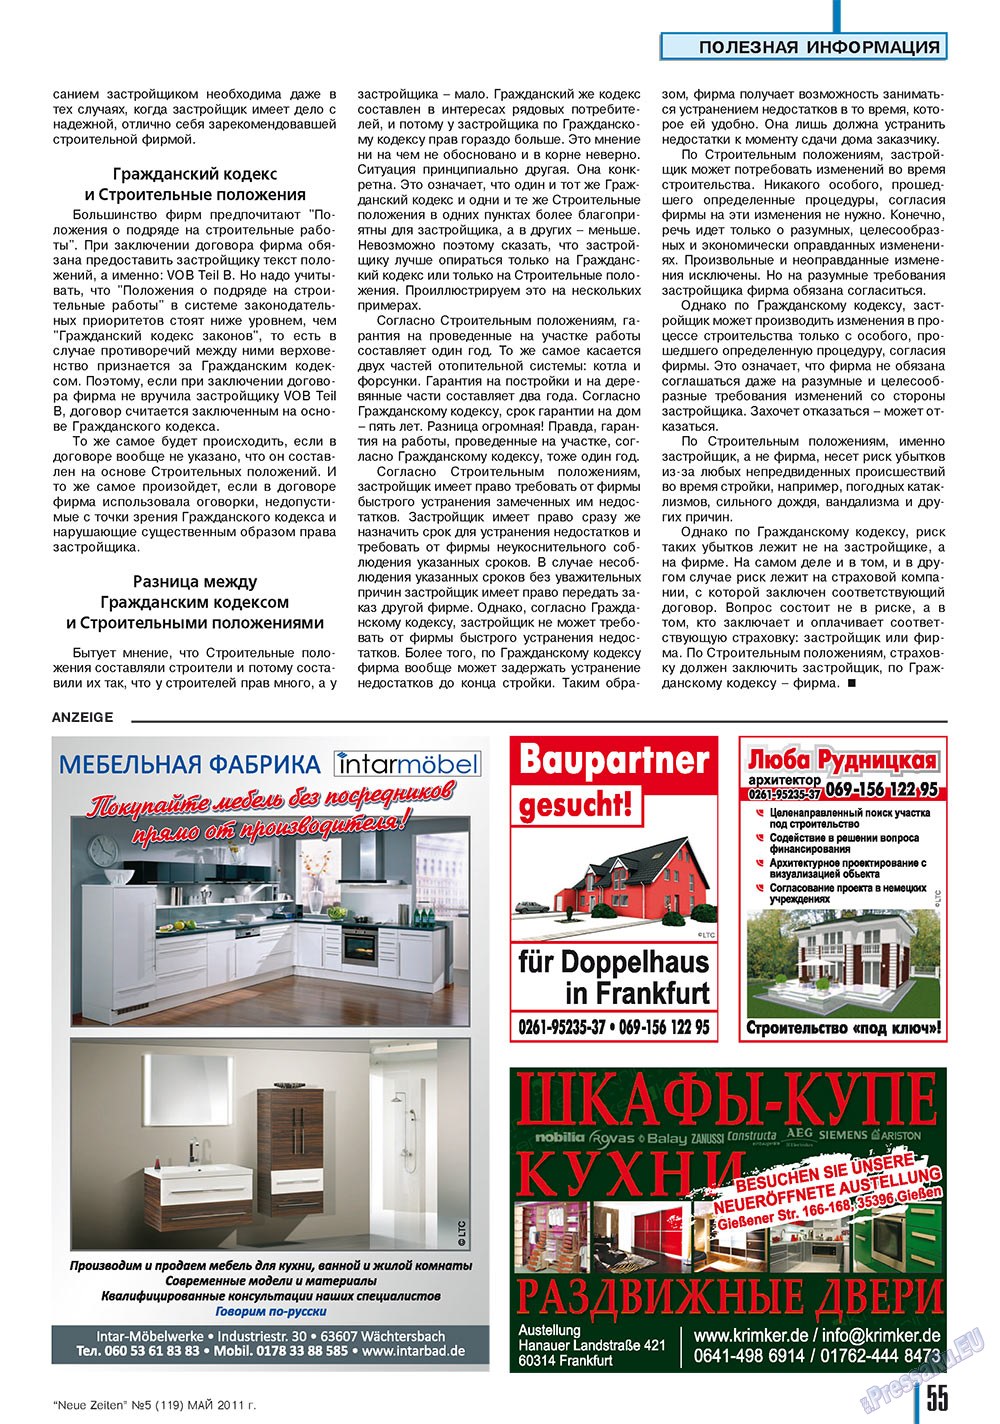 Neue Zeiten (журнал). 2011 год, номер 5, стр. 55